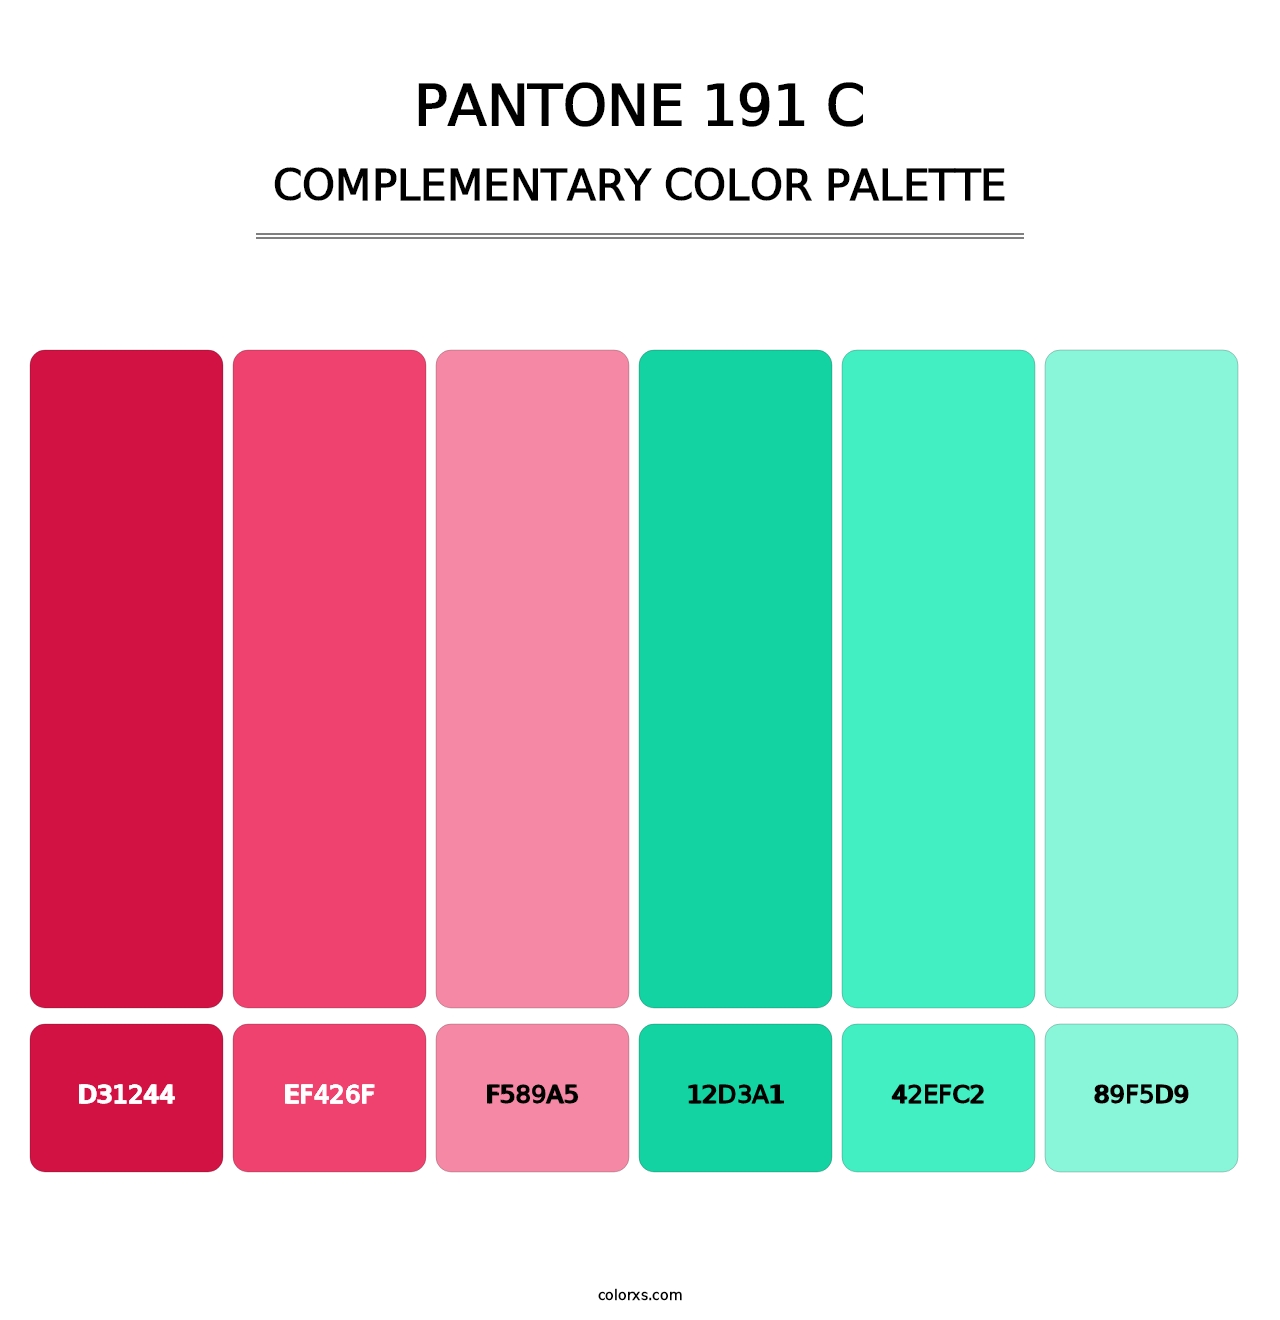 PANTONE 191 C - Complementary Color Palette